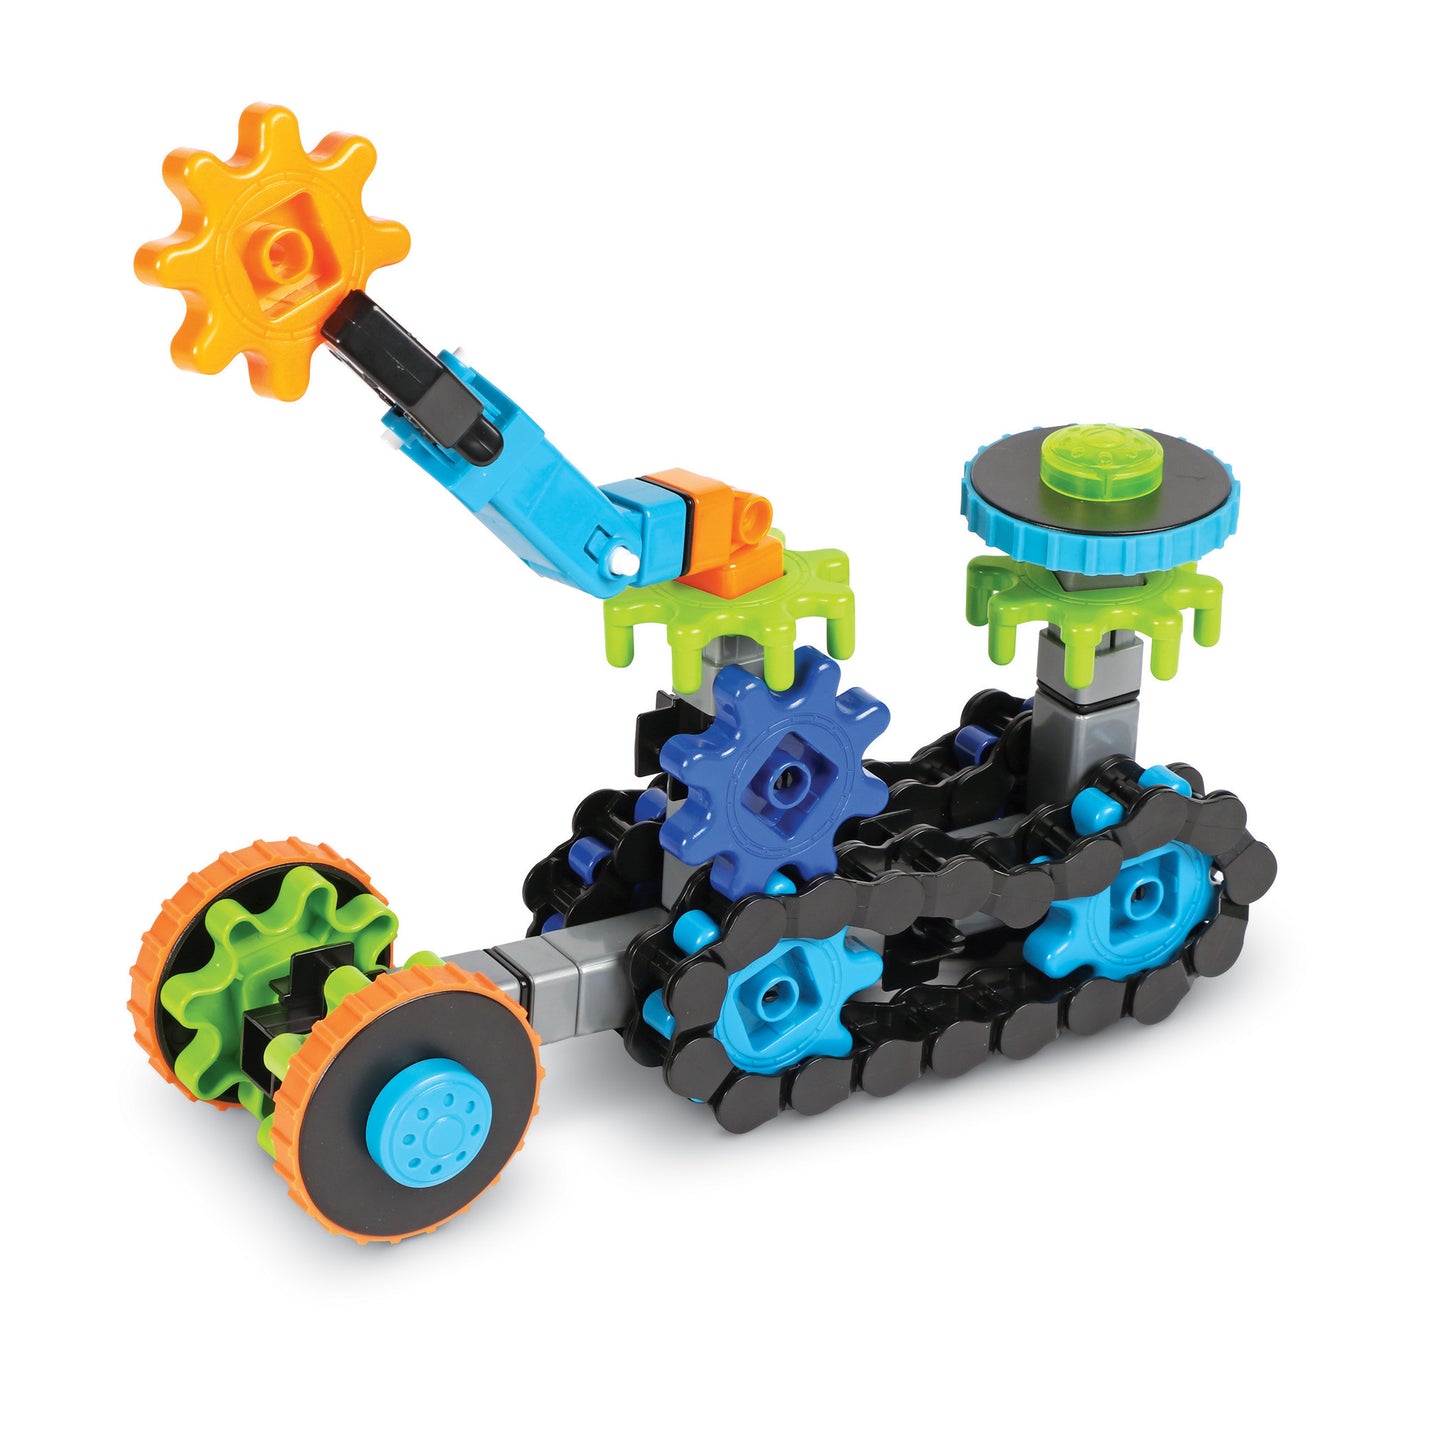 Robots in Motion Building Set